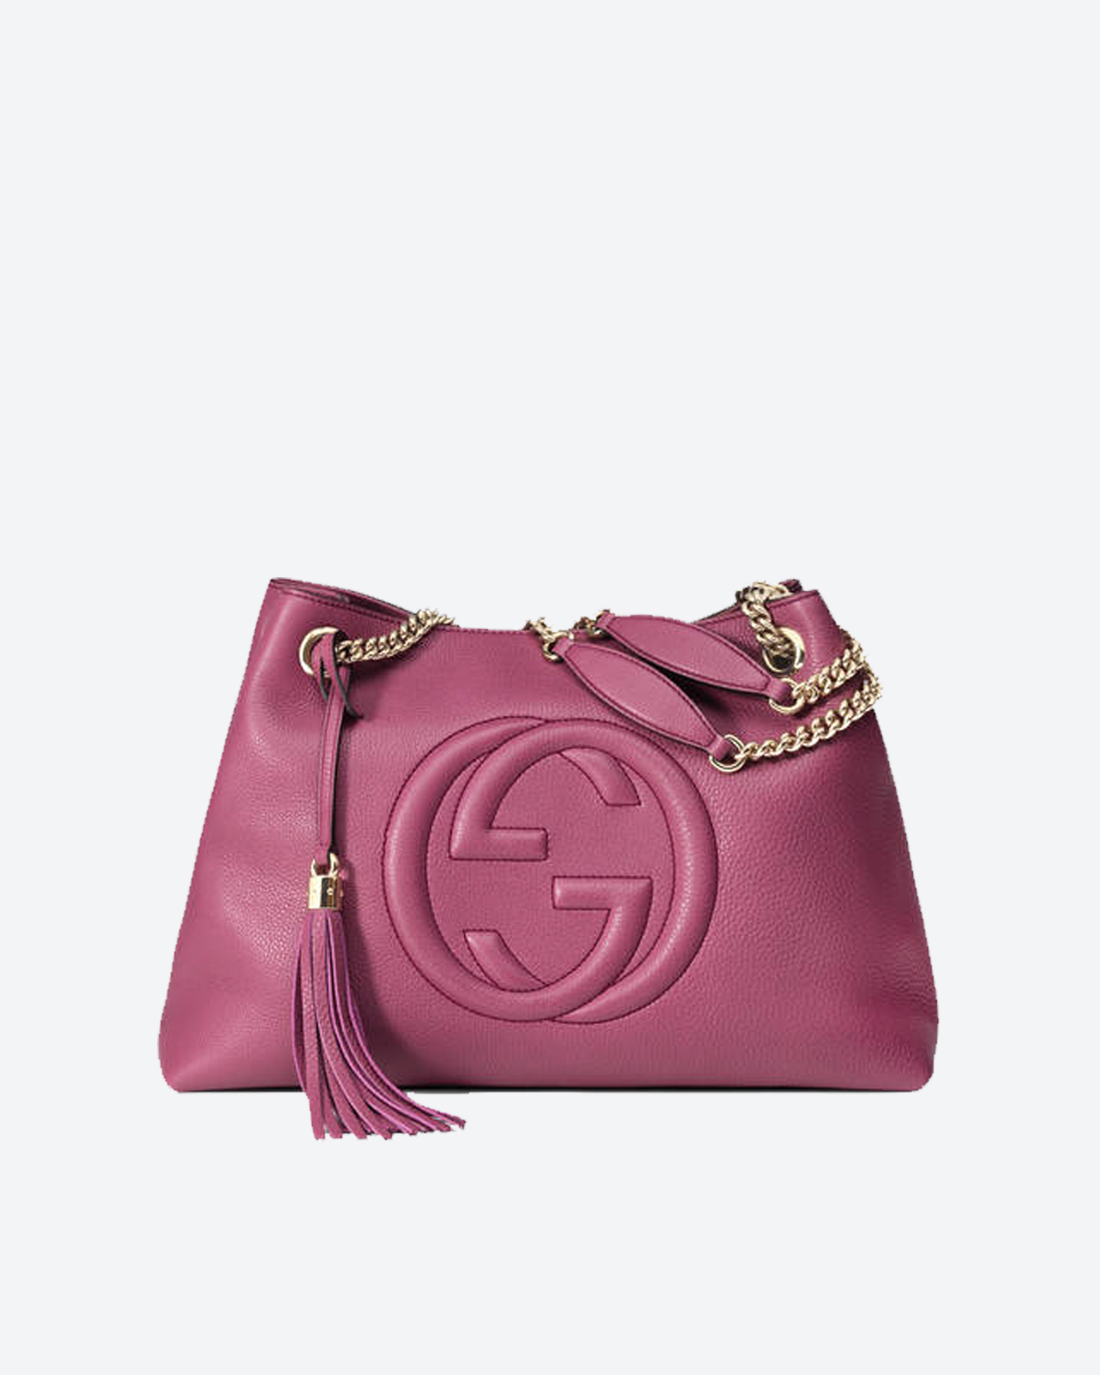 Gucci Soho Pink bag